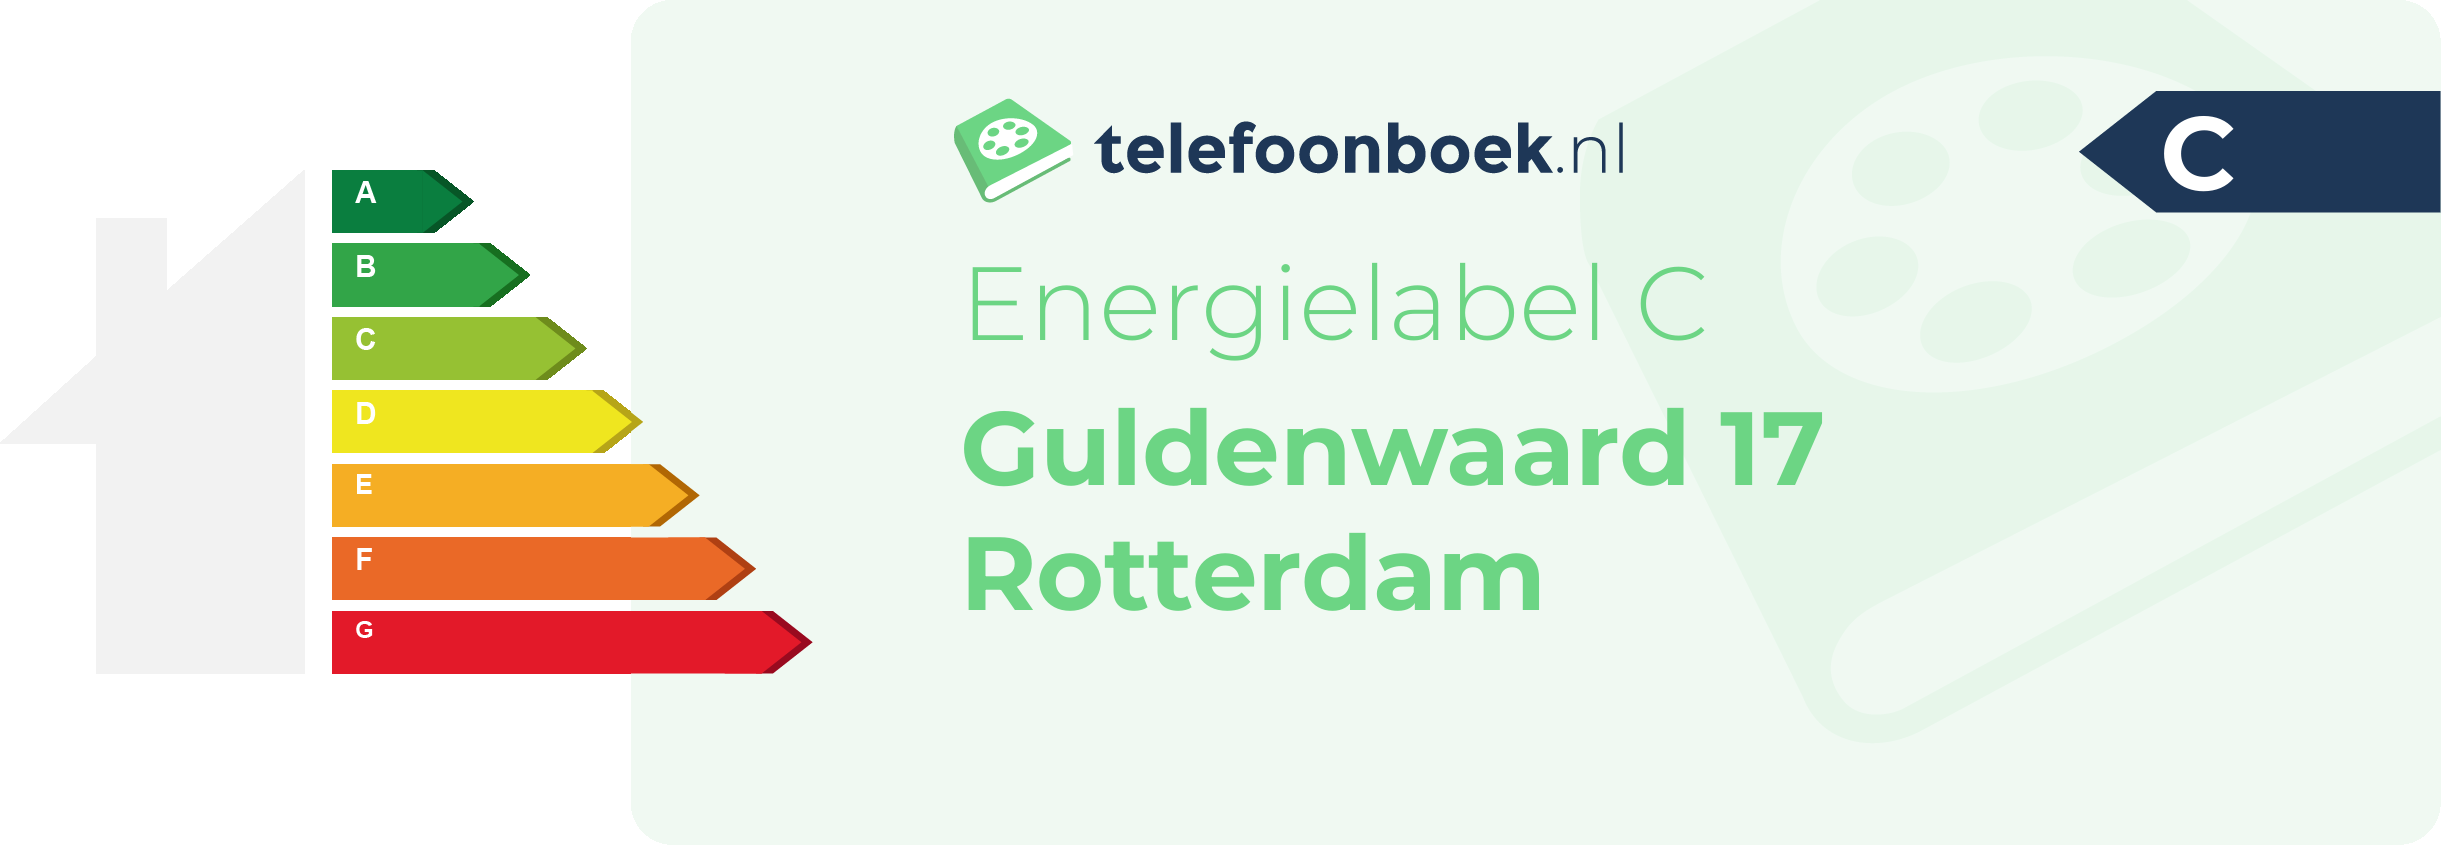 Energielabel Guldenwaard 17 Rotterdam